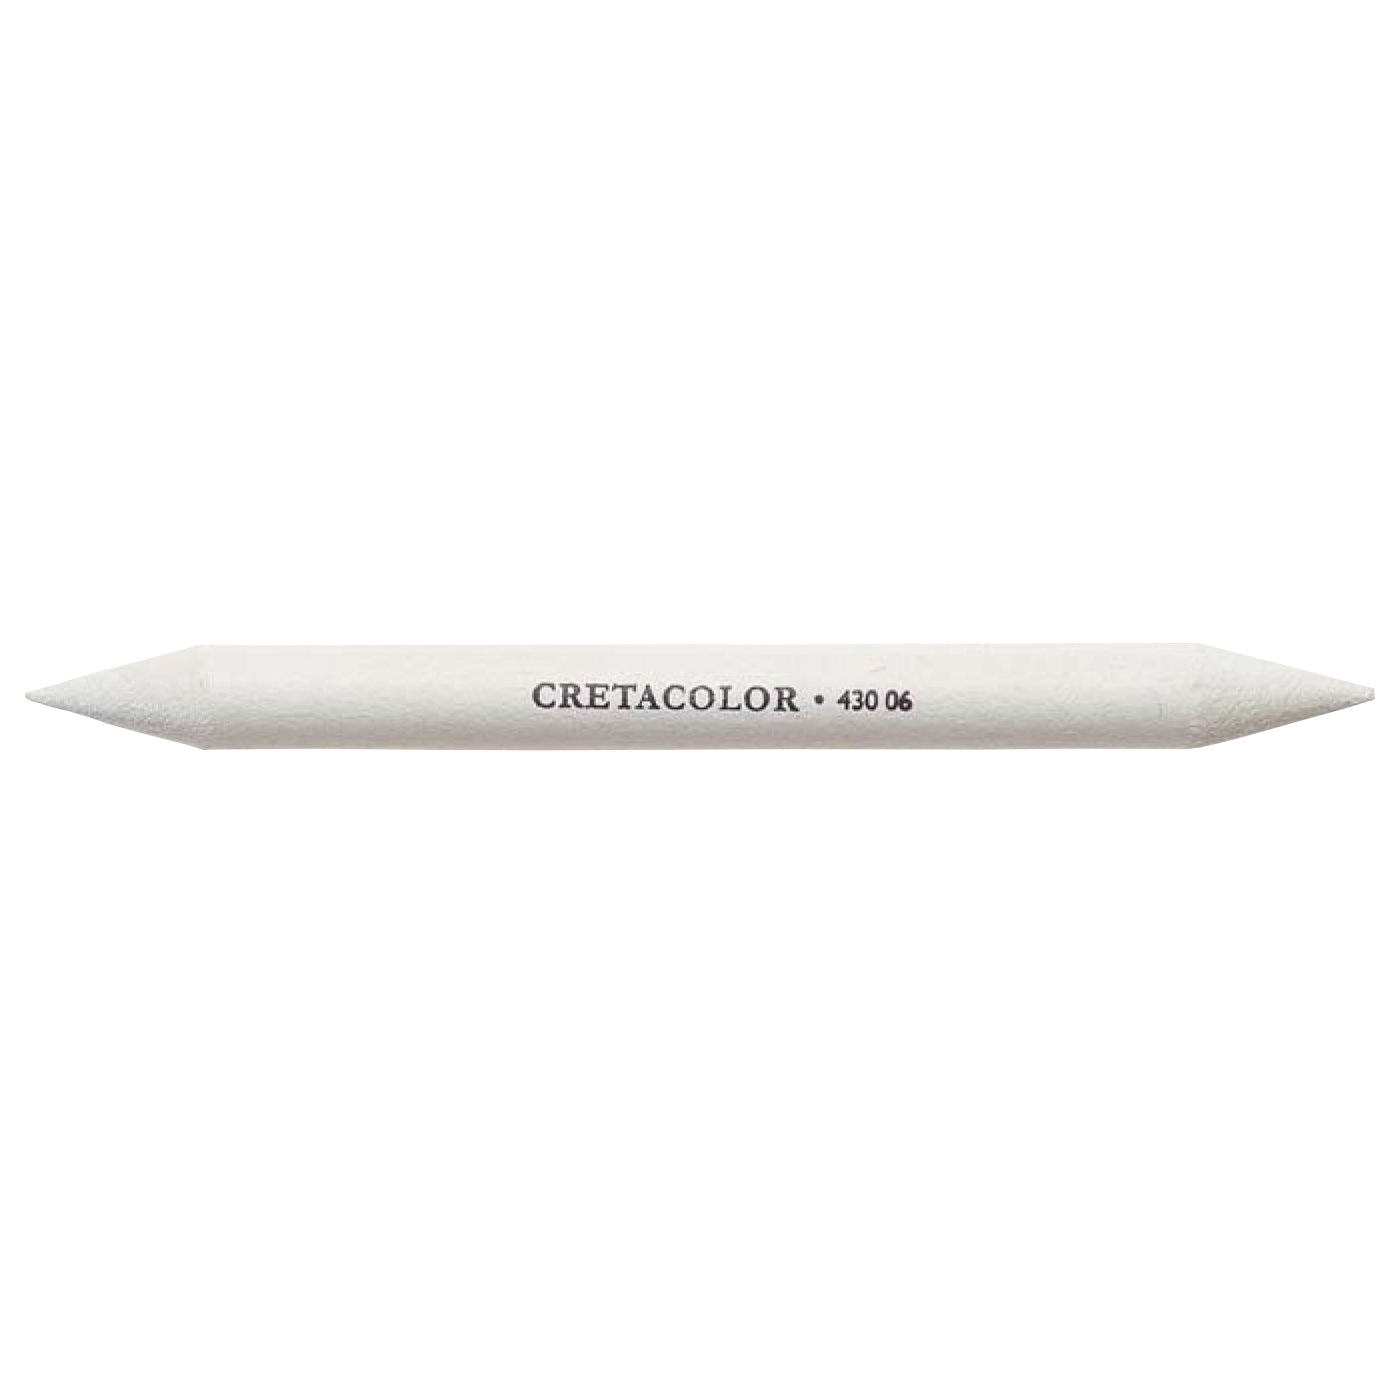 Cretacolor Blending Stick